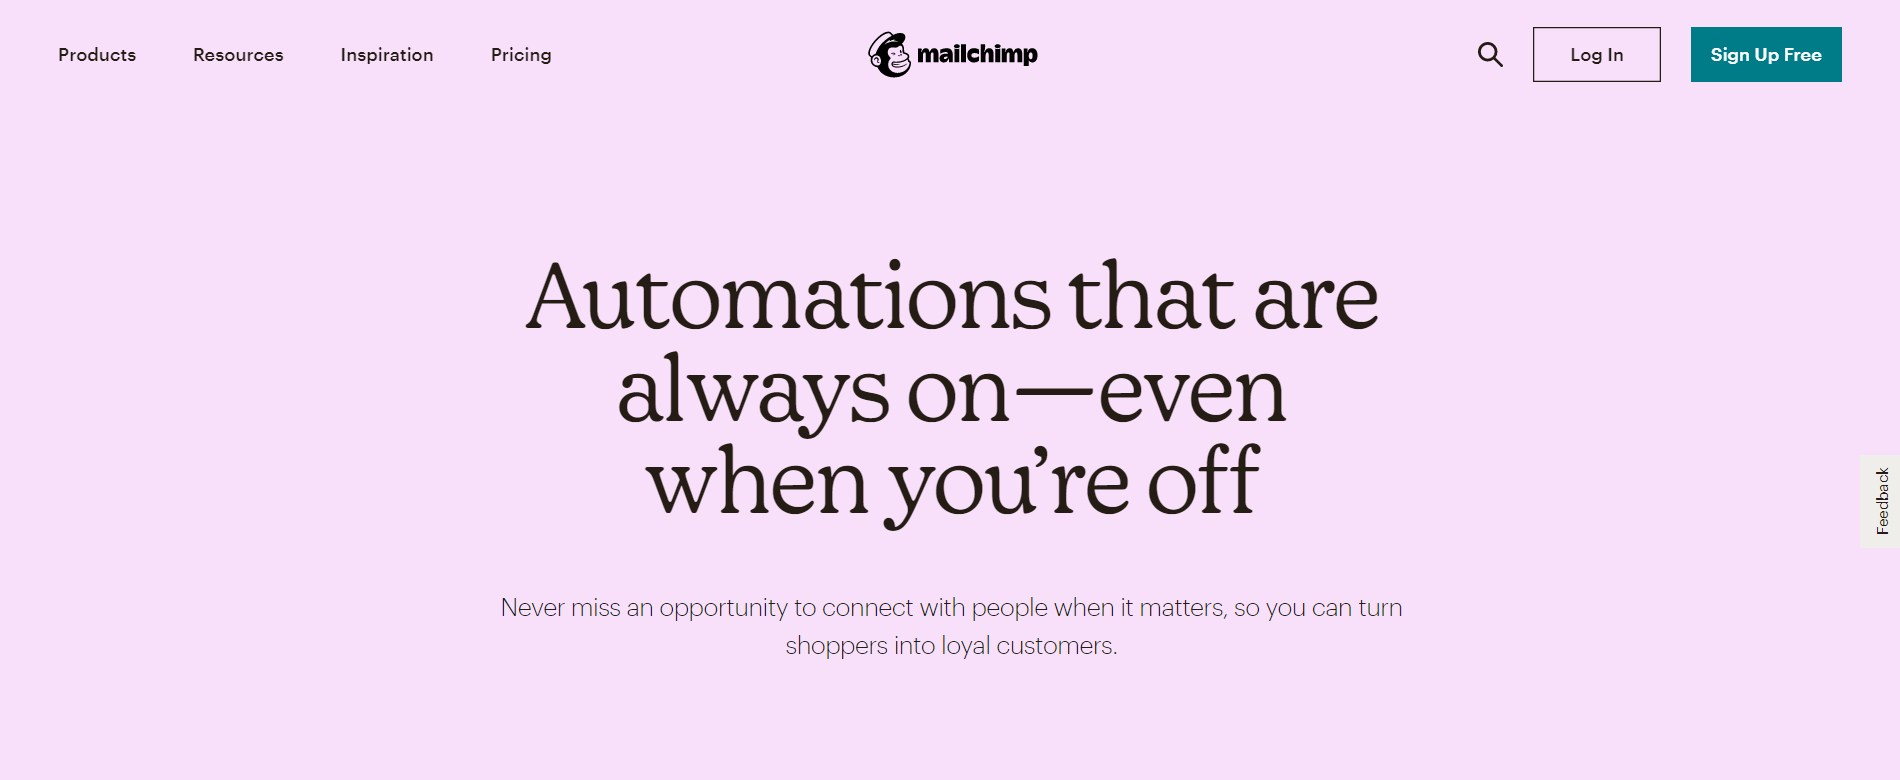 Автоматизация маркетинга | Сервис MailChimp